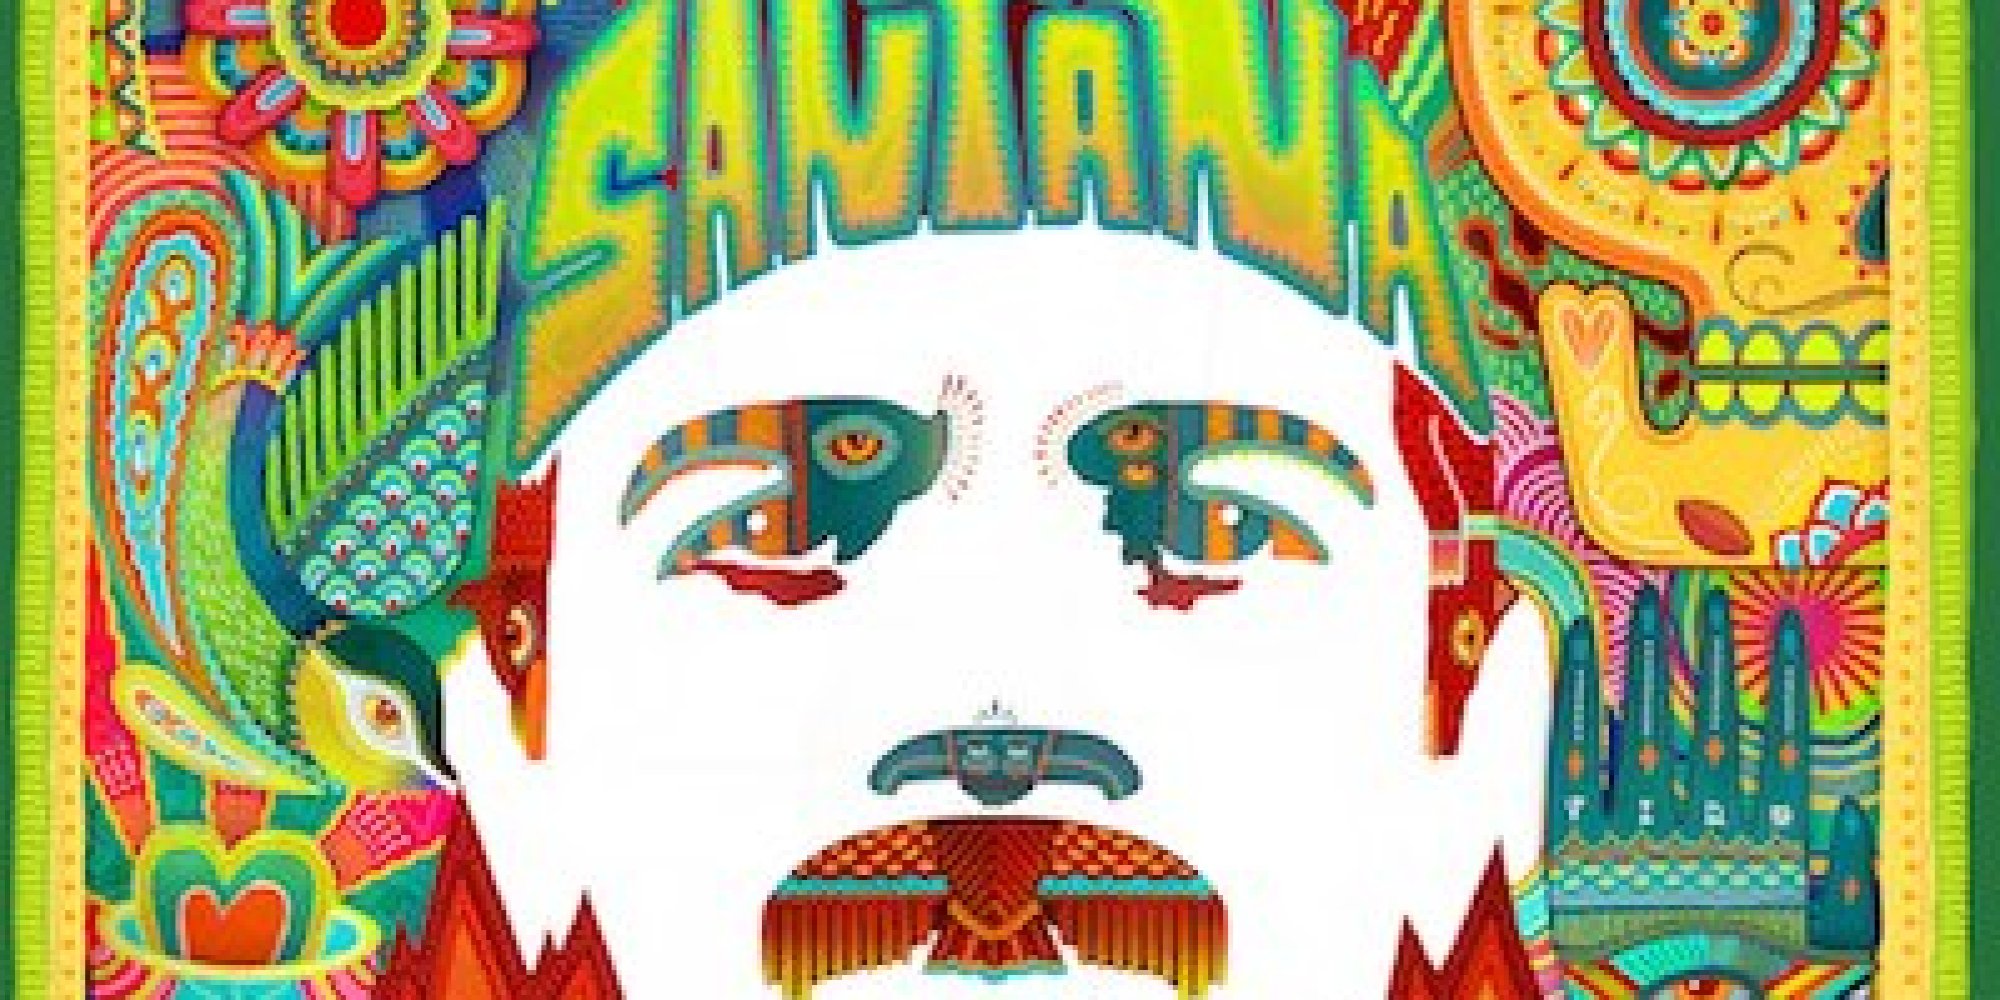 Carlos Santana Unveils His 'Corazon' Album Cover, Collaborations (PHOTO